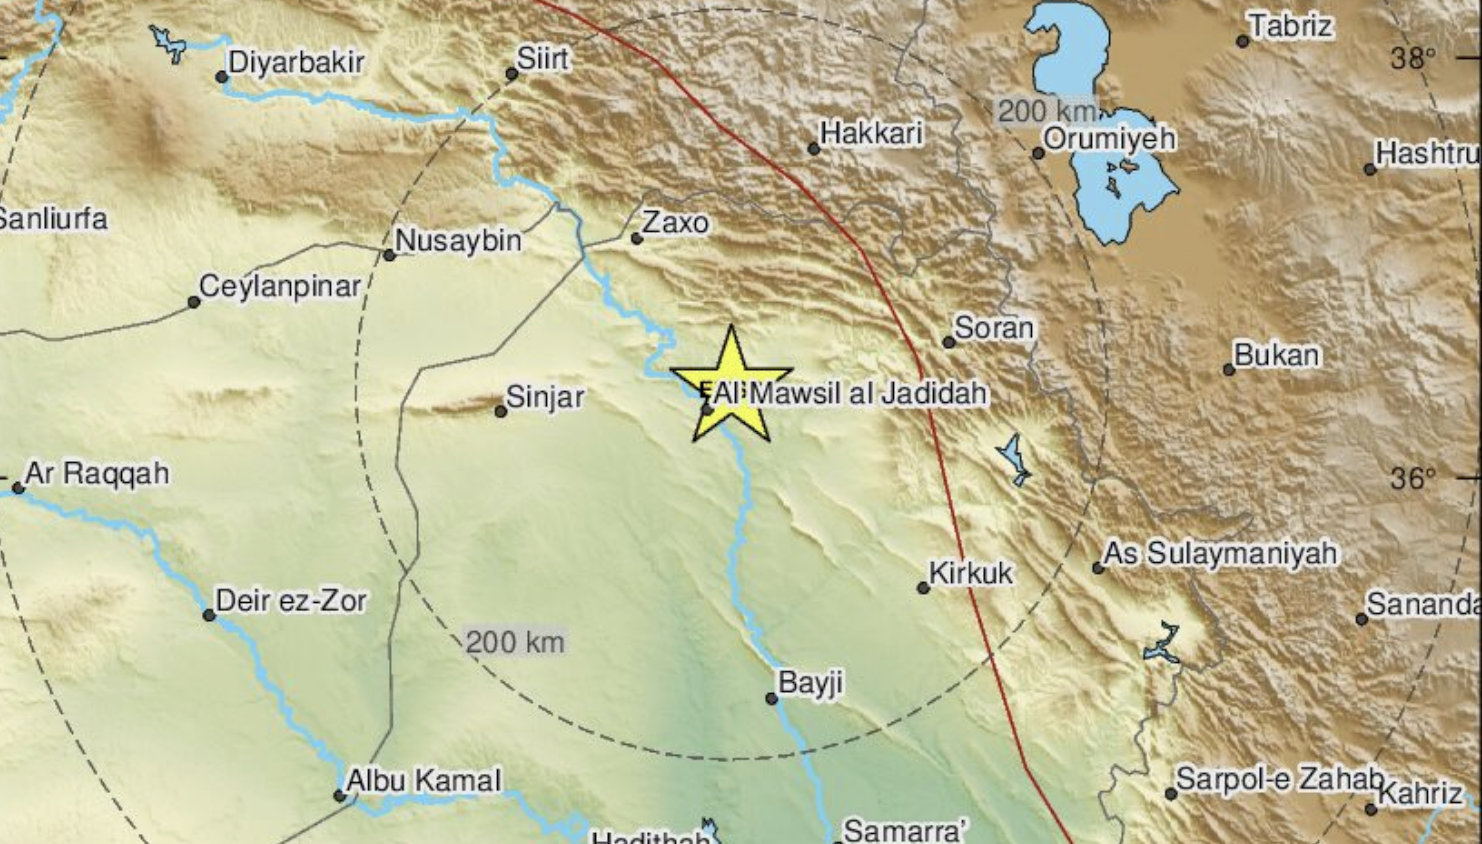 Two moderate quakes hit Iraq on Saturday